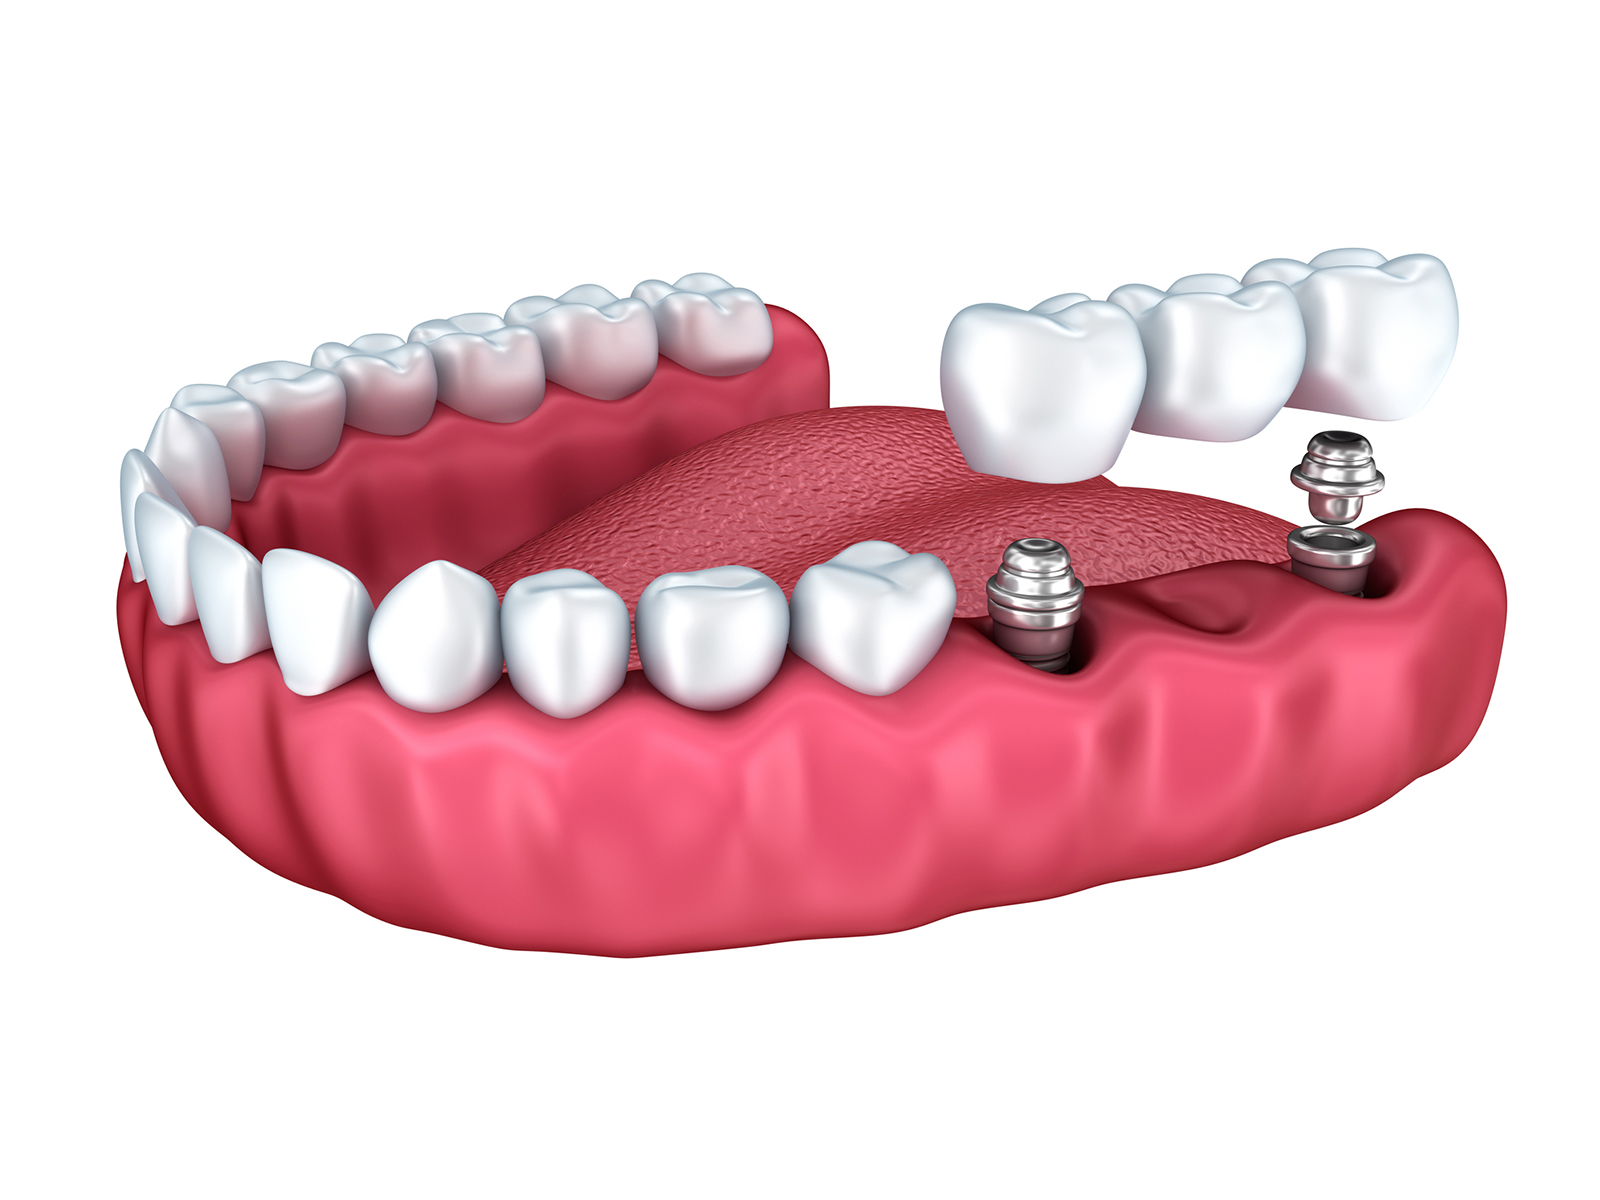 Do dental implants shorten your life?